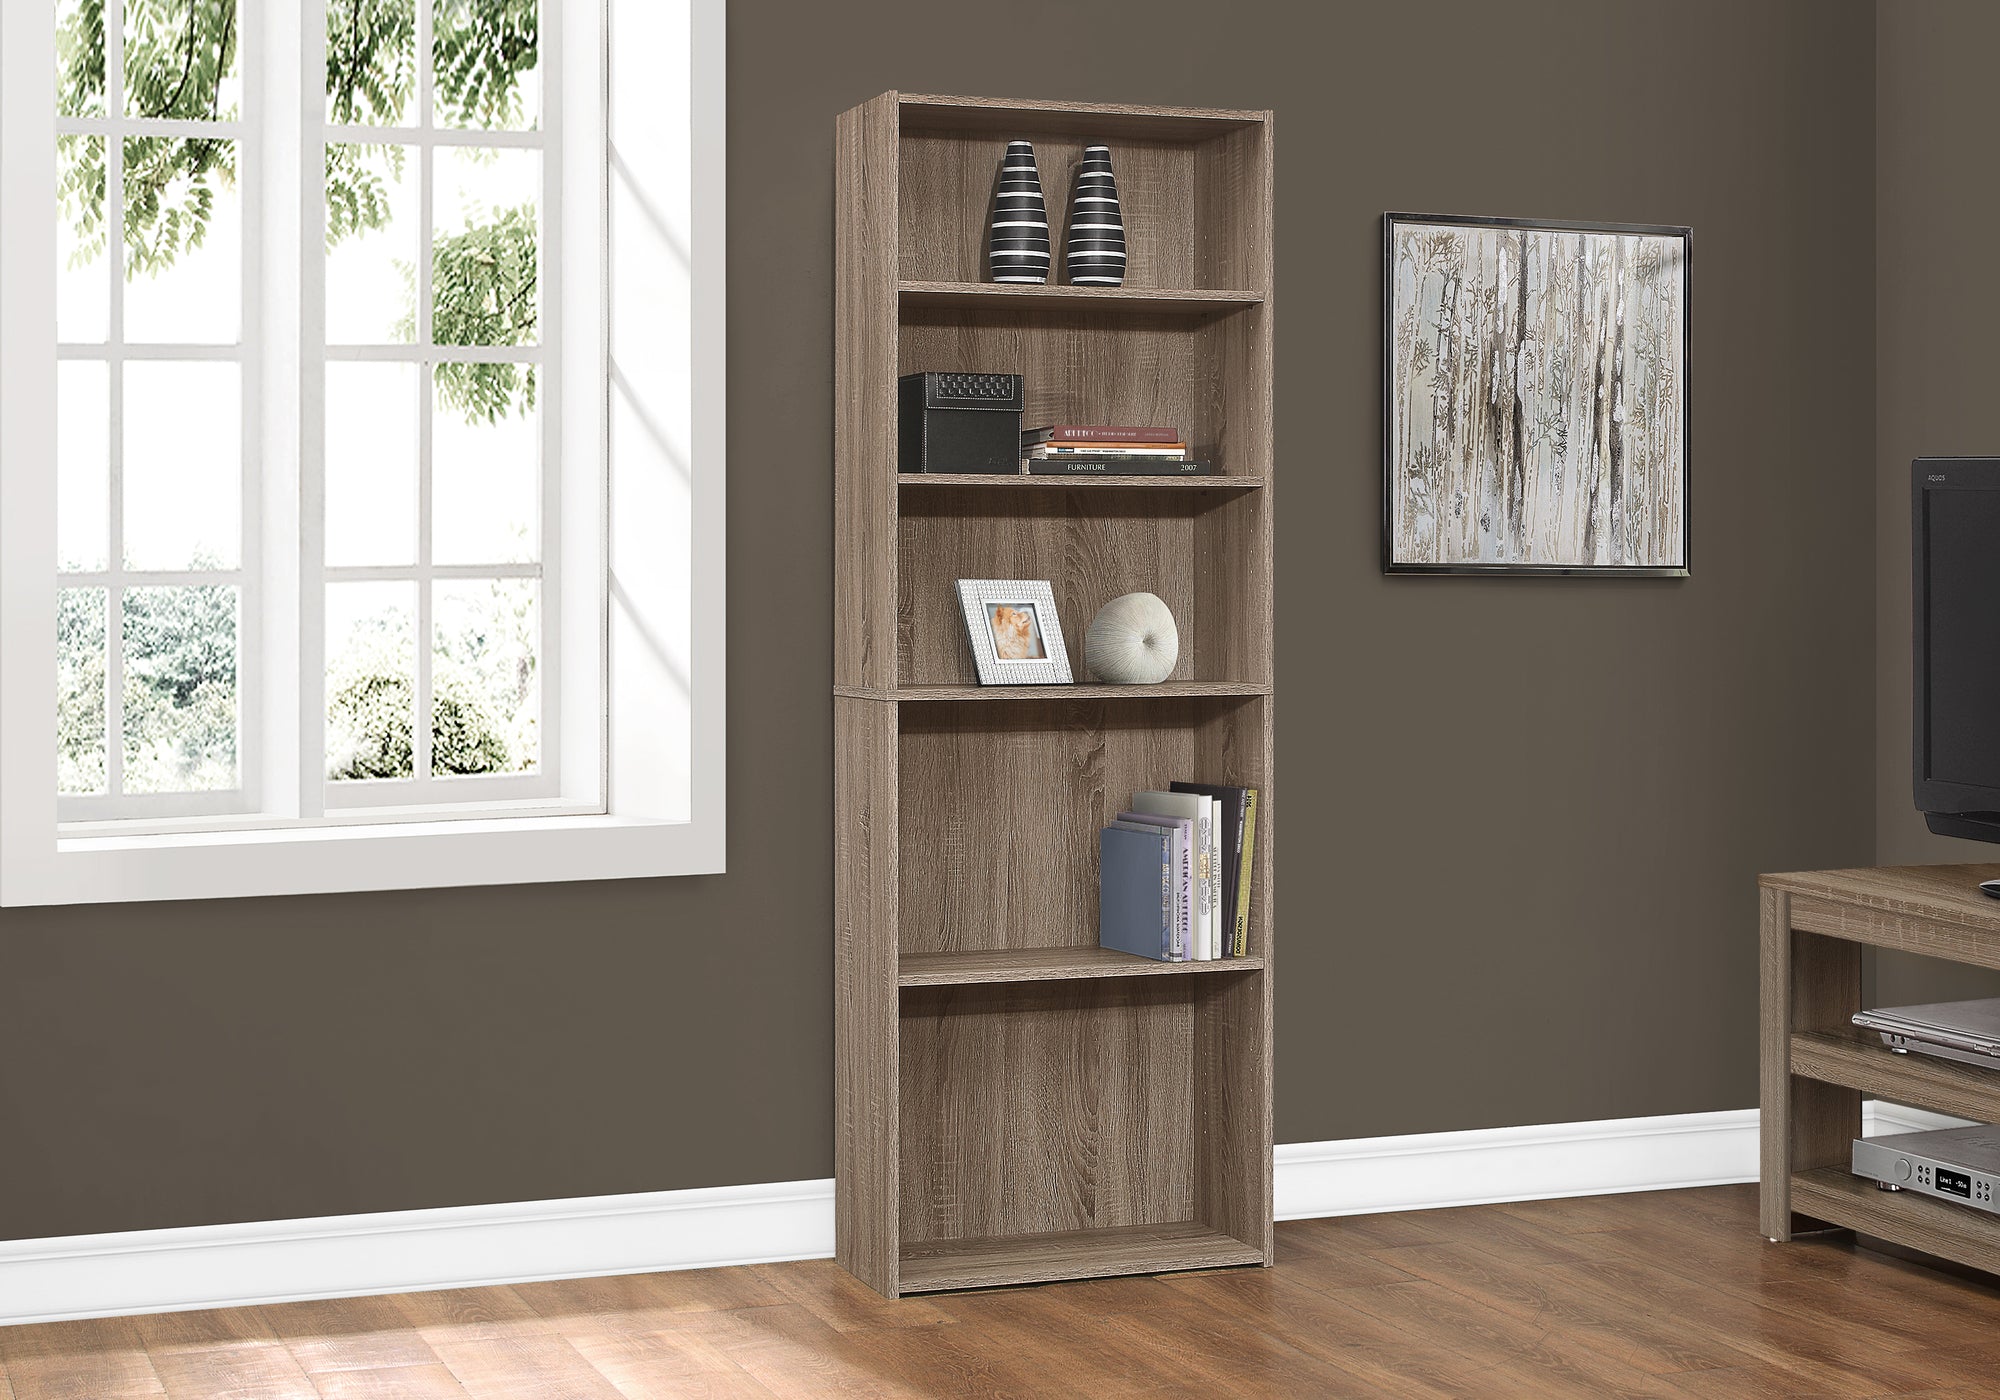 MN-297468    Bookshelf, Bookcase, 6 Tier, 72"H, Office, Bedroom, Laminate, Dark Taupe, Contemporary, Modern, Transitional